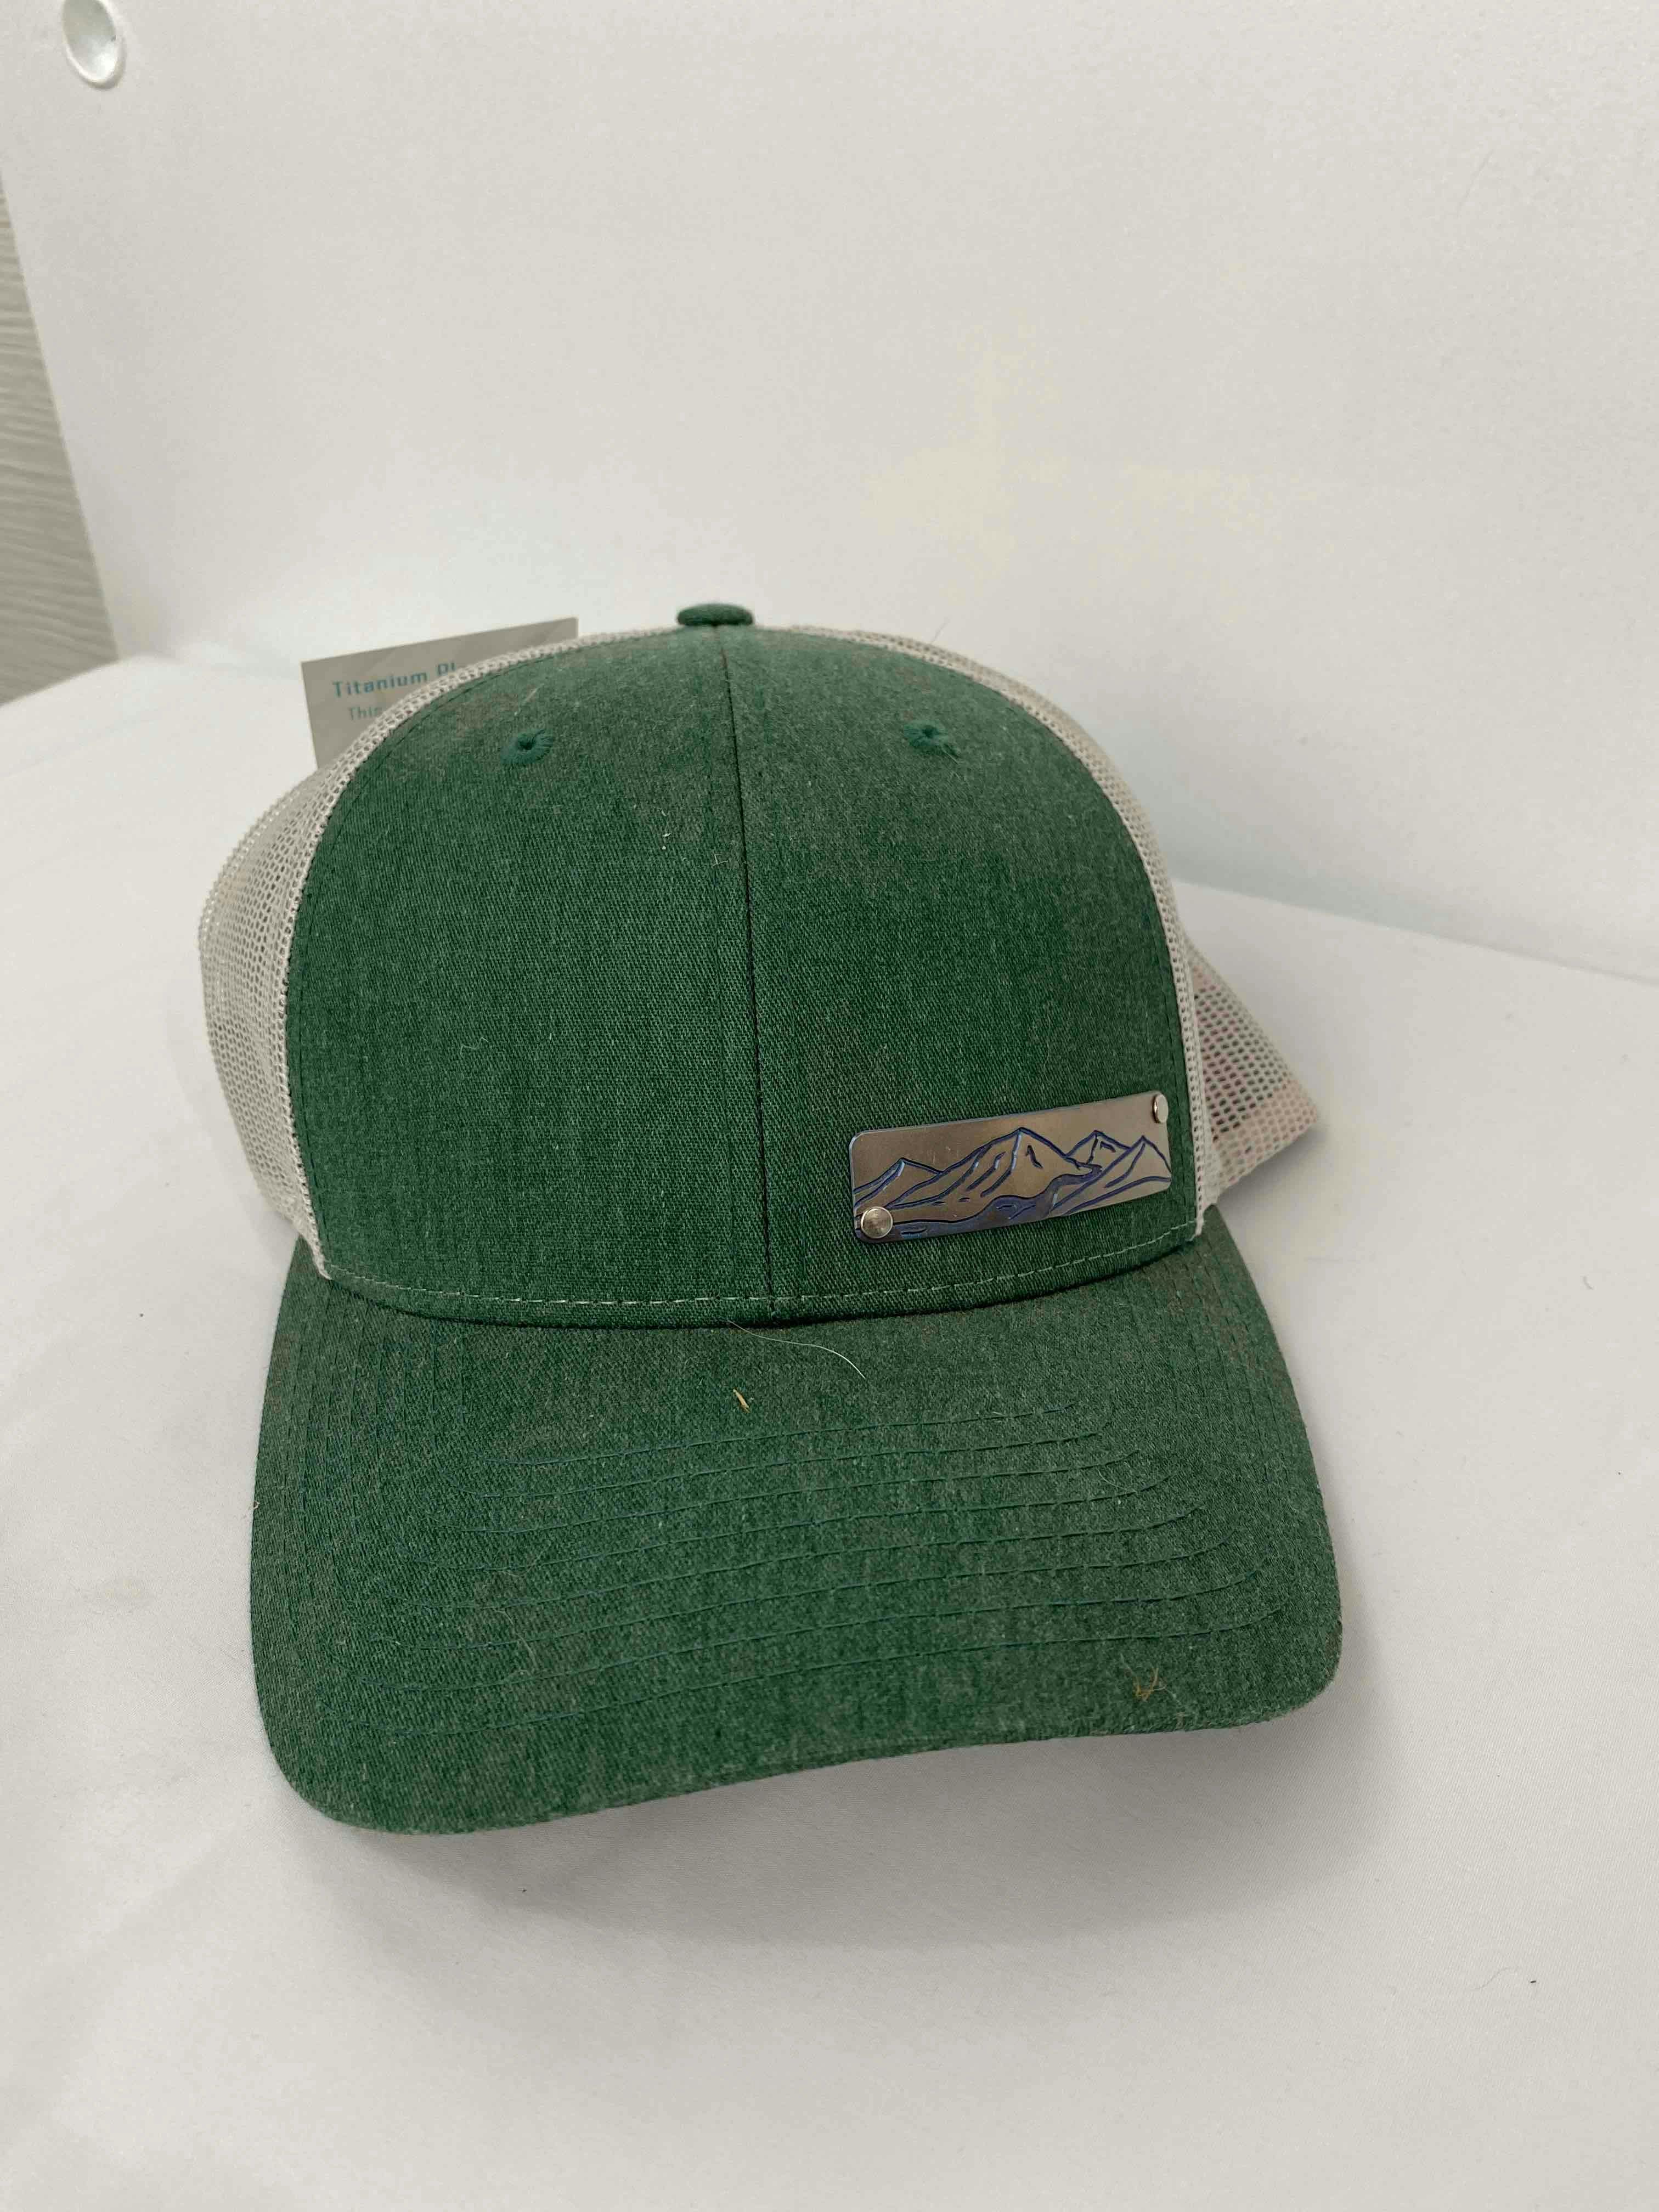 Splitter Designs Trucker Hat 